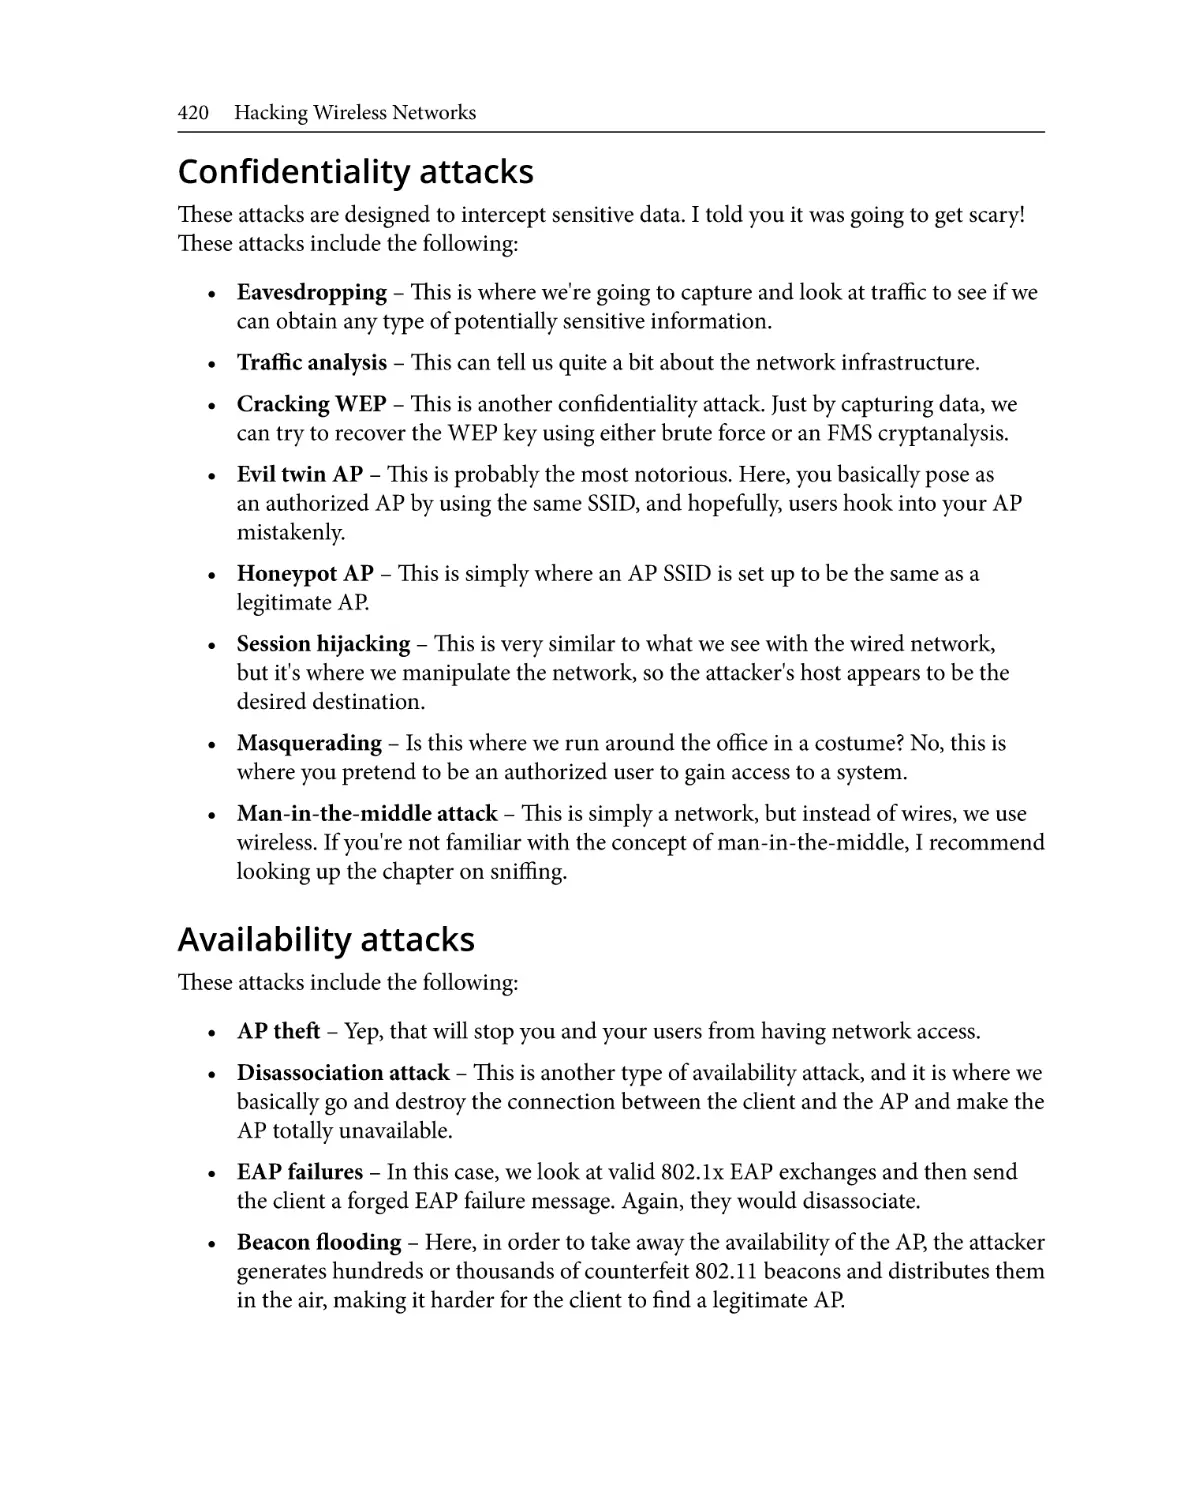 Confidentiality attacks
Availability attacks